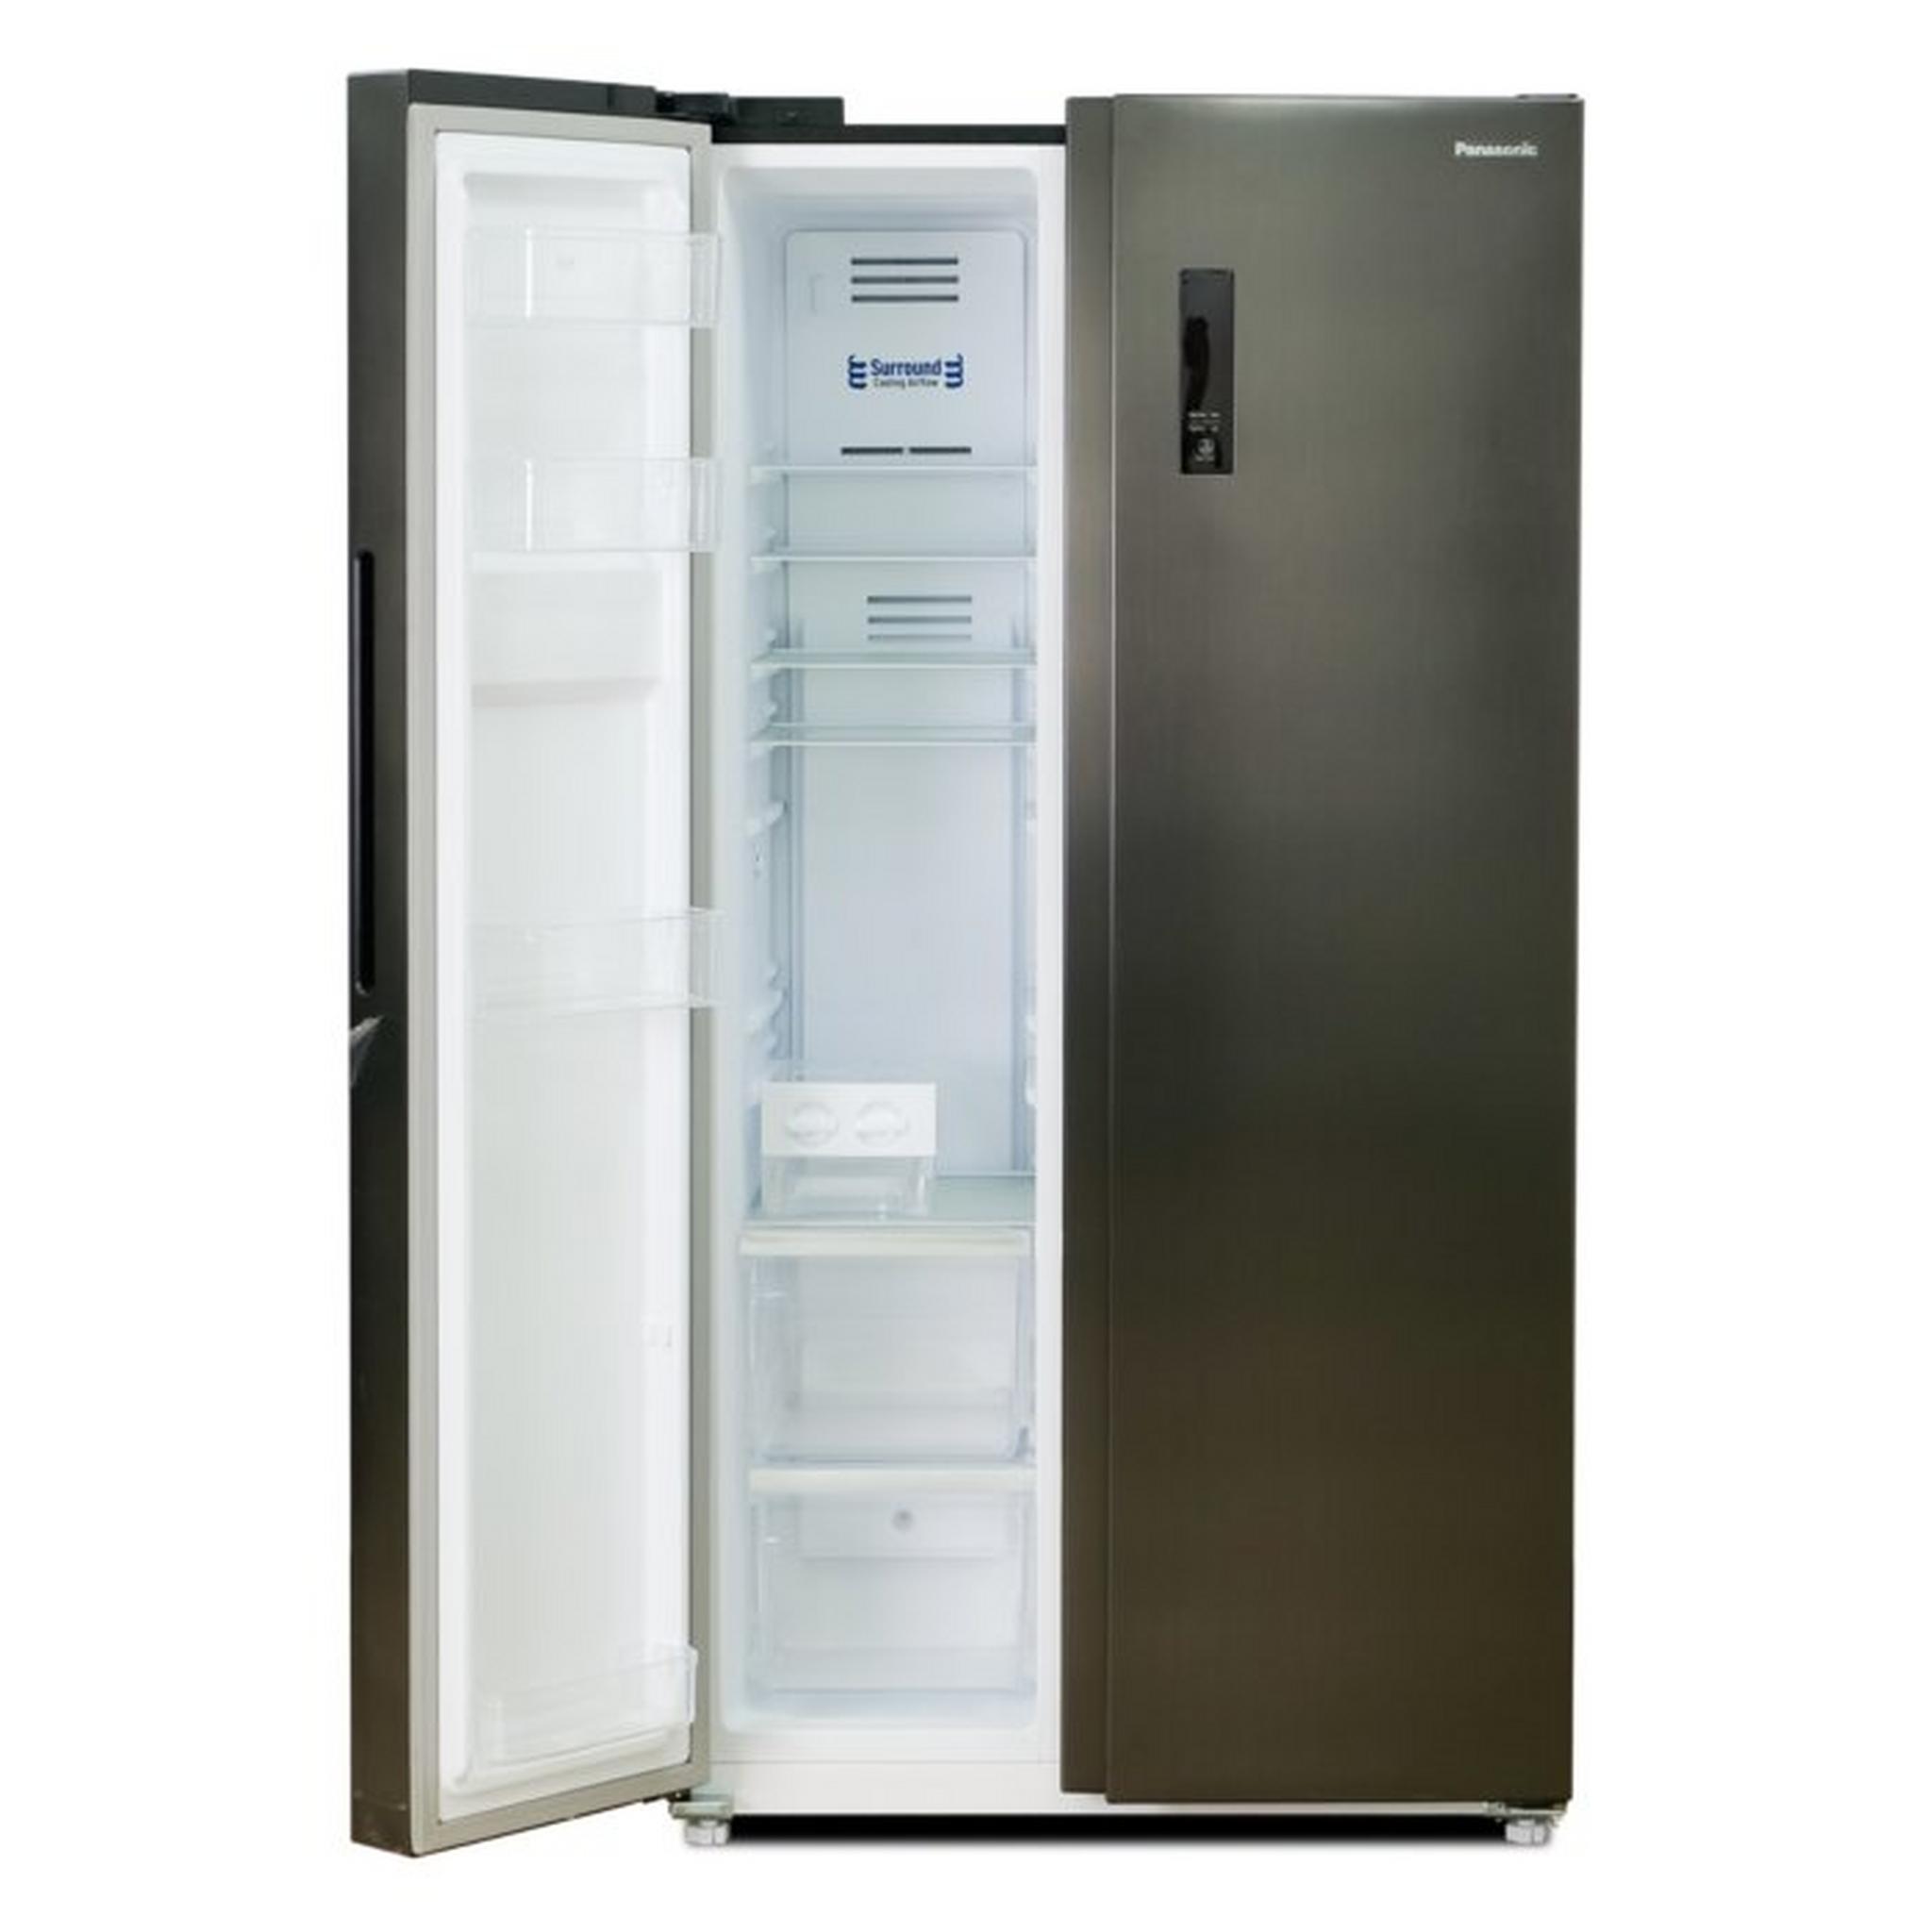 Pansonic Side by Side Refrigerator, 25.9CFT, 734L Capacity, NR-BS734MSAS - Dark Grey